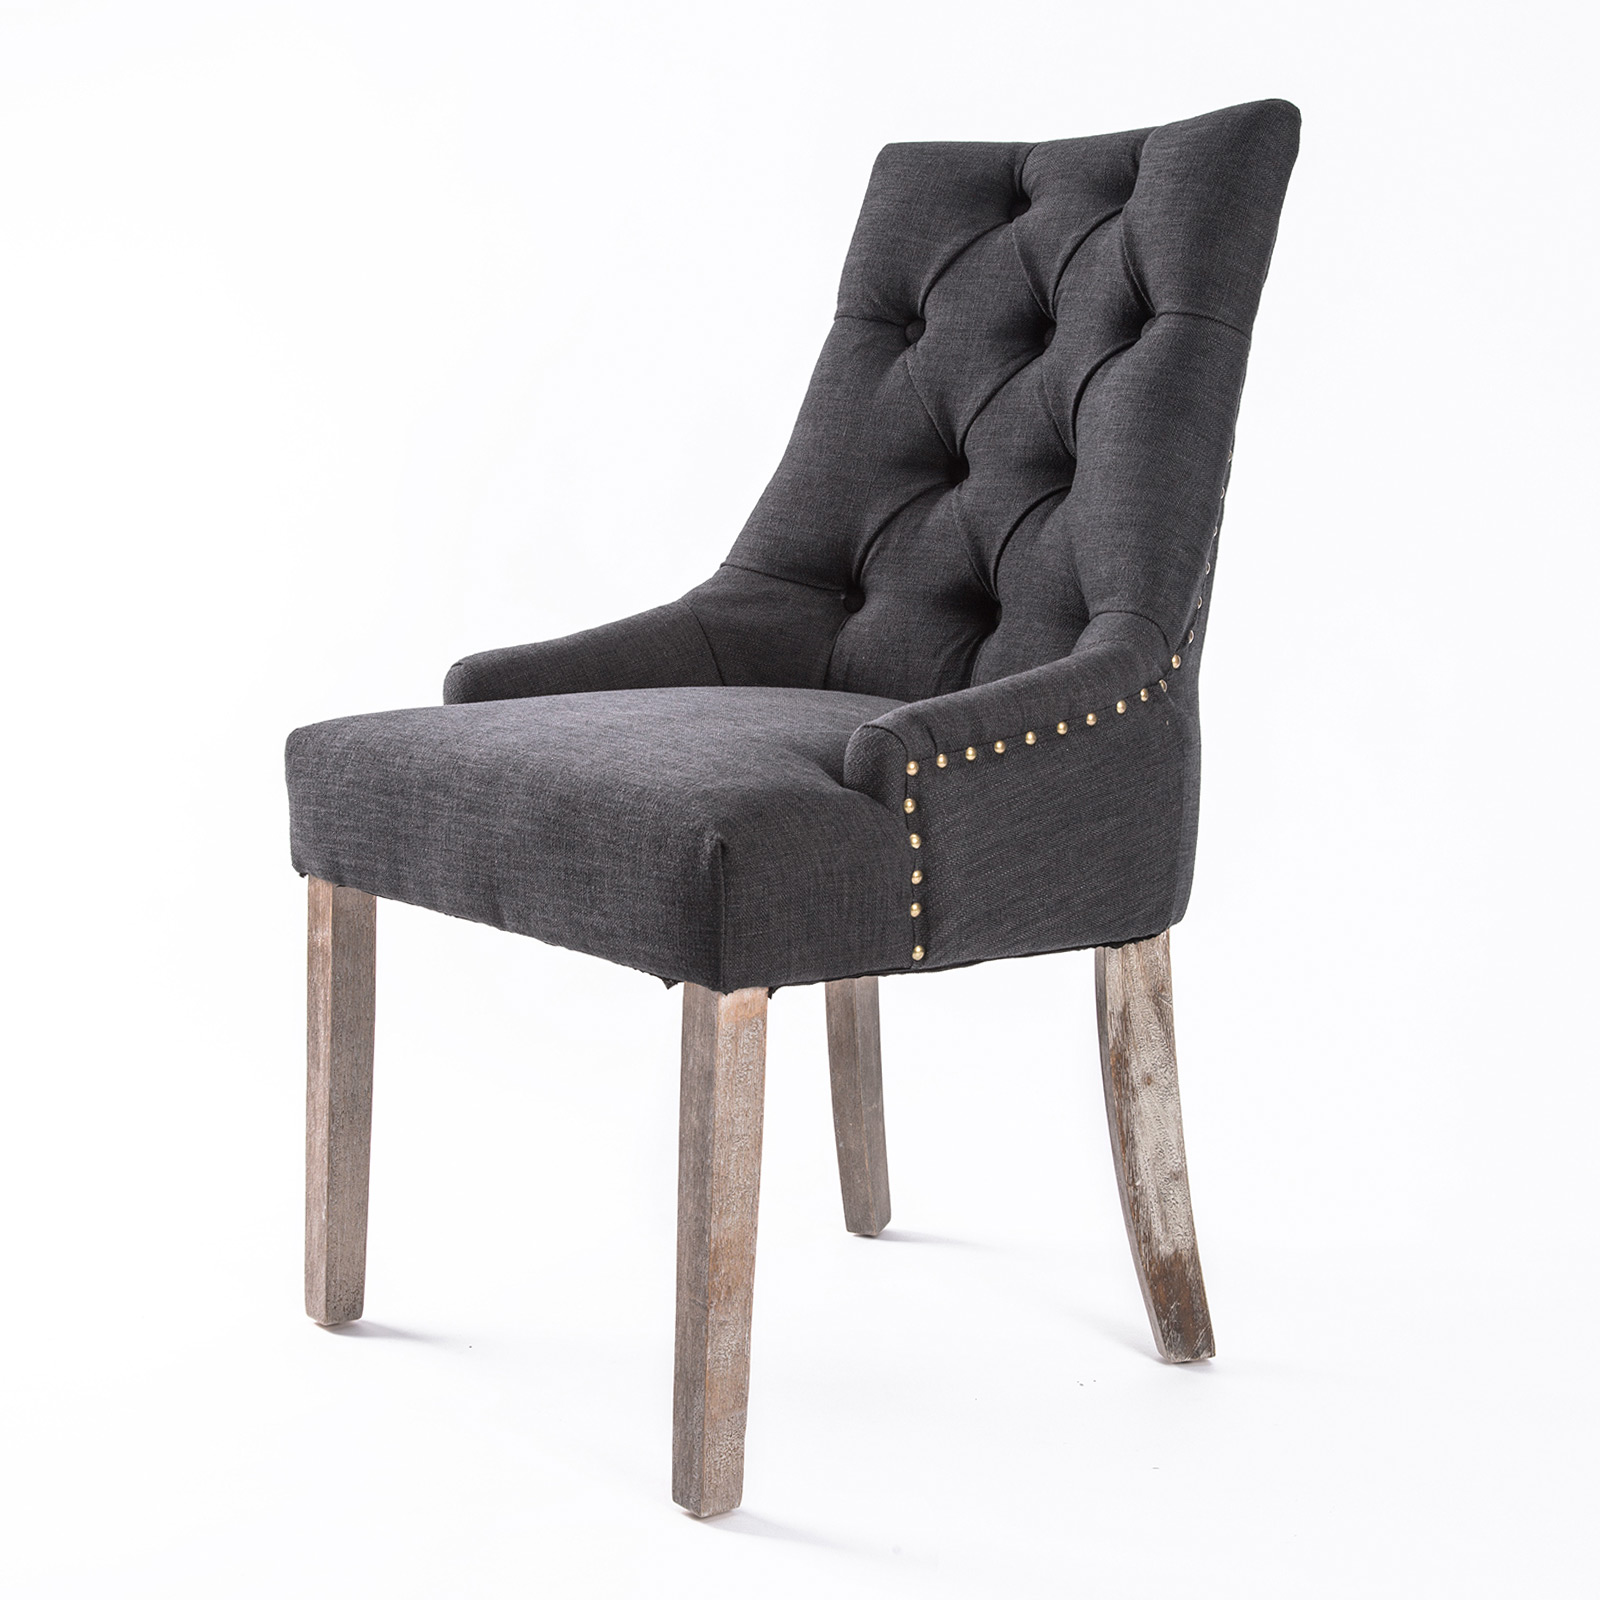 1X French Provincial Oak Leg Chair AMOUR - BLACK